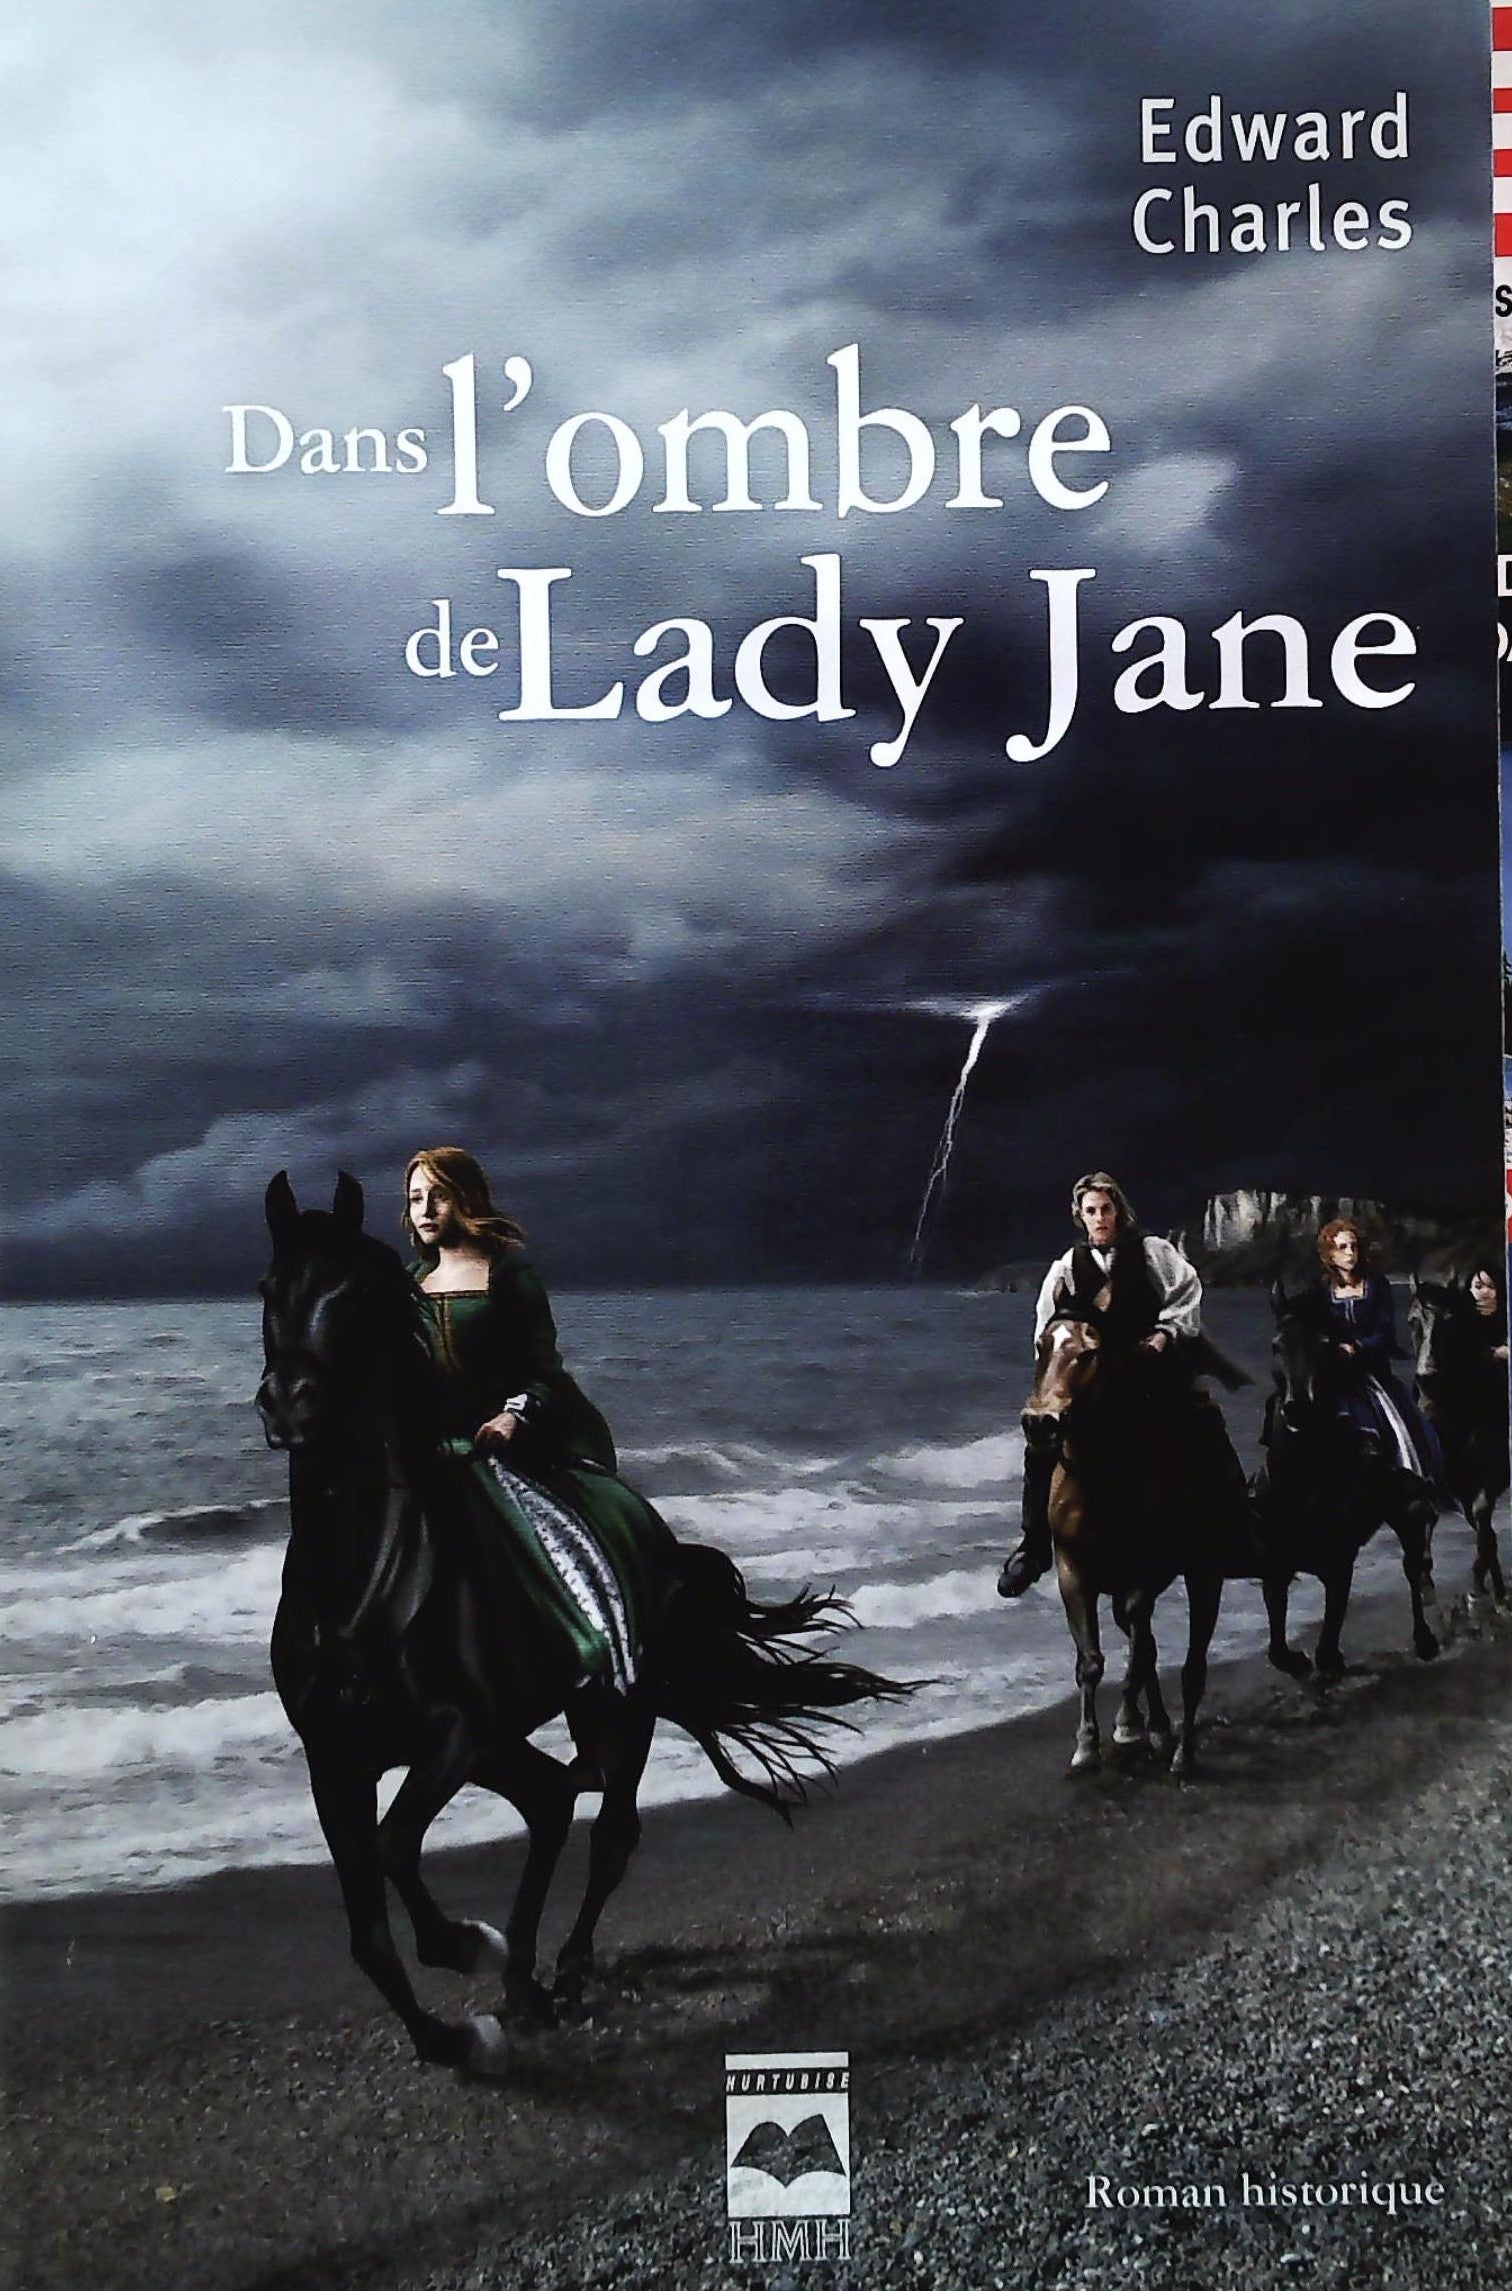 Livre ISBN 2896470859 Dans l'ombre dd Lady Jane (Edward Charles)